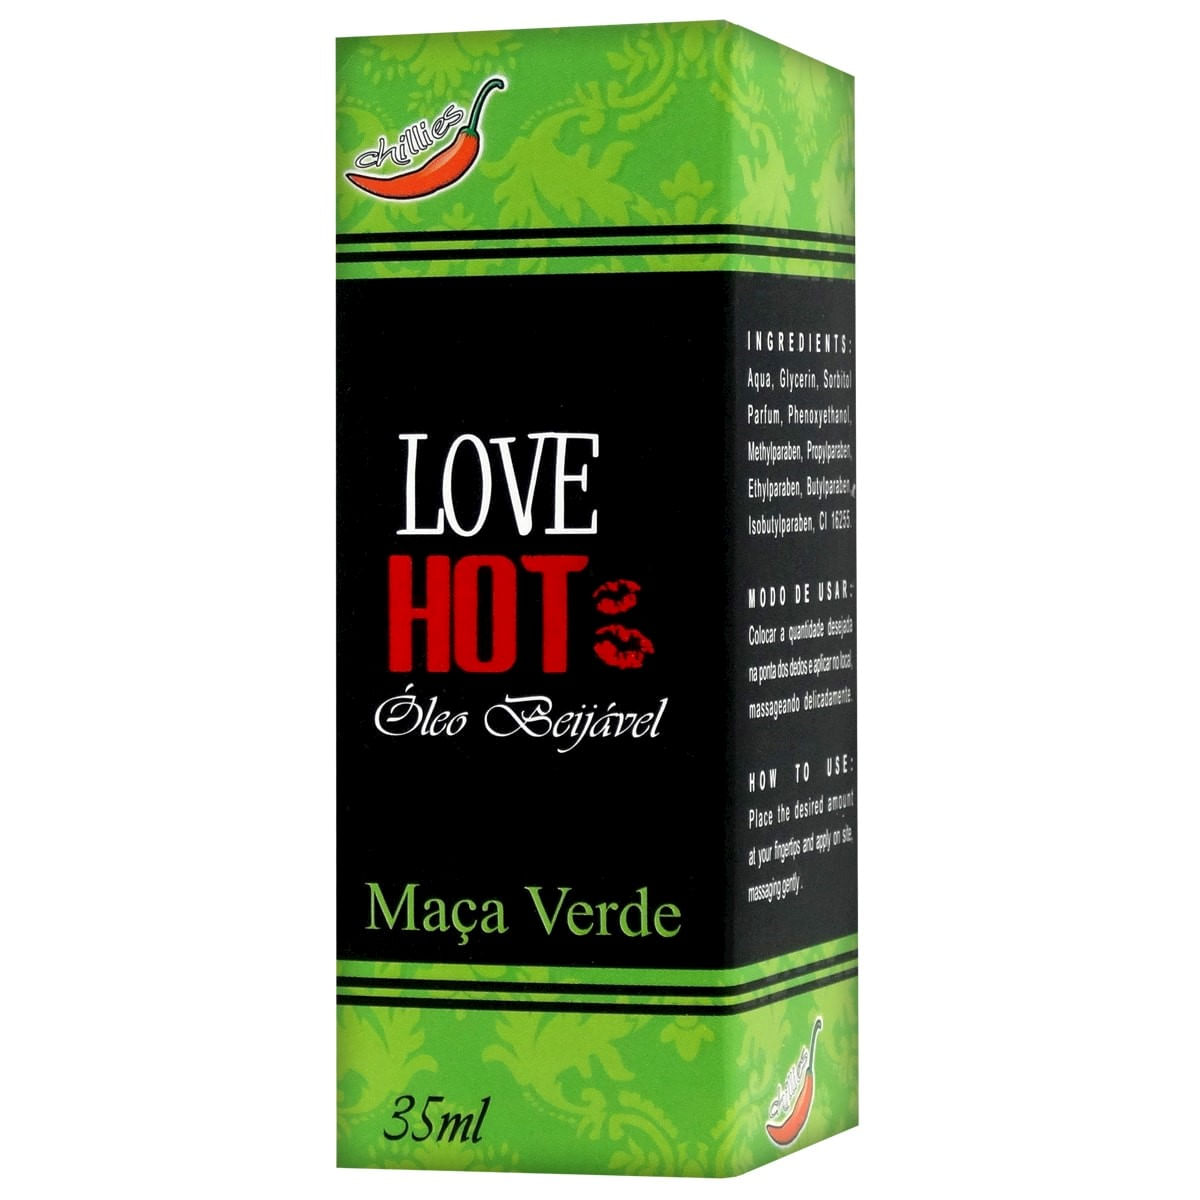 Love Hot Óleo Beijável de Maça Verde 35ml Chillies